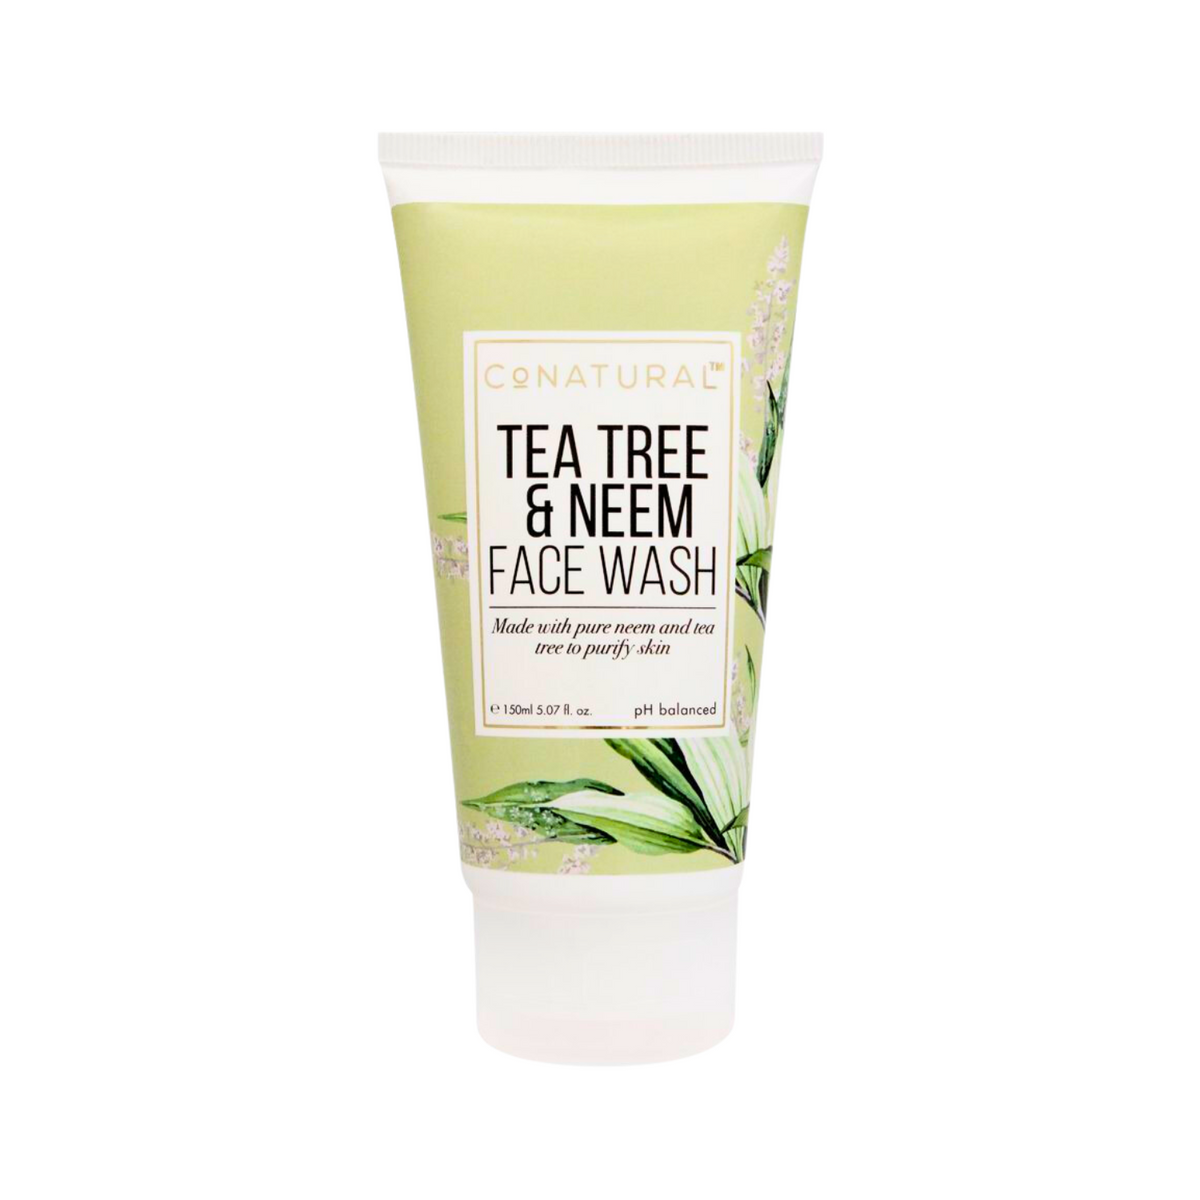 co-natural-tea-tree-neem-face-wash-150g